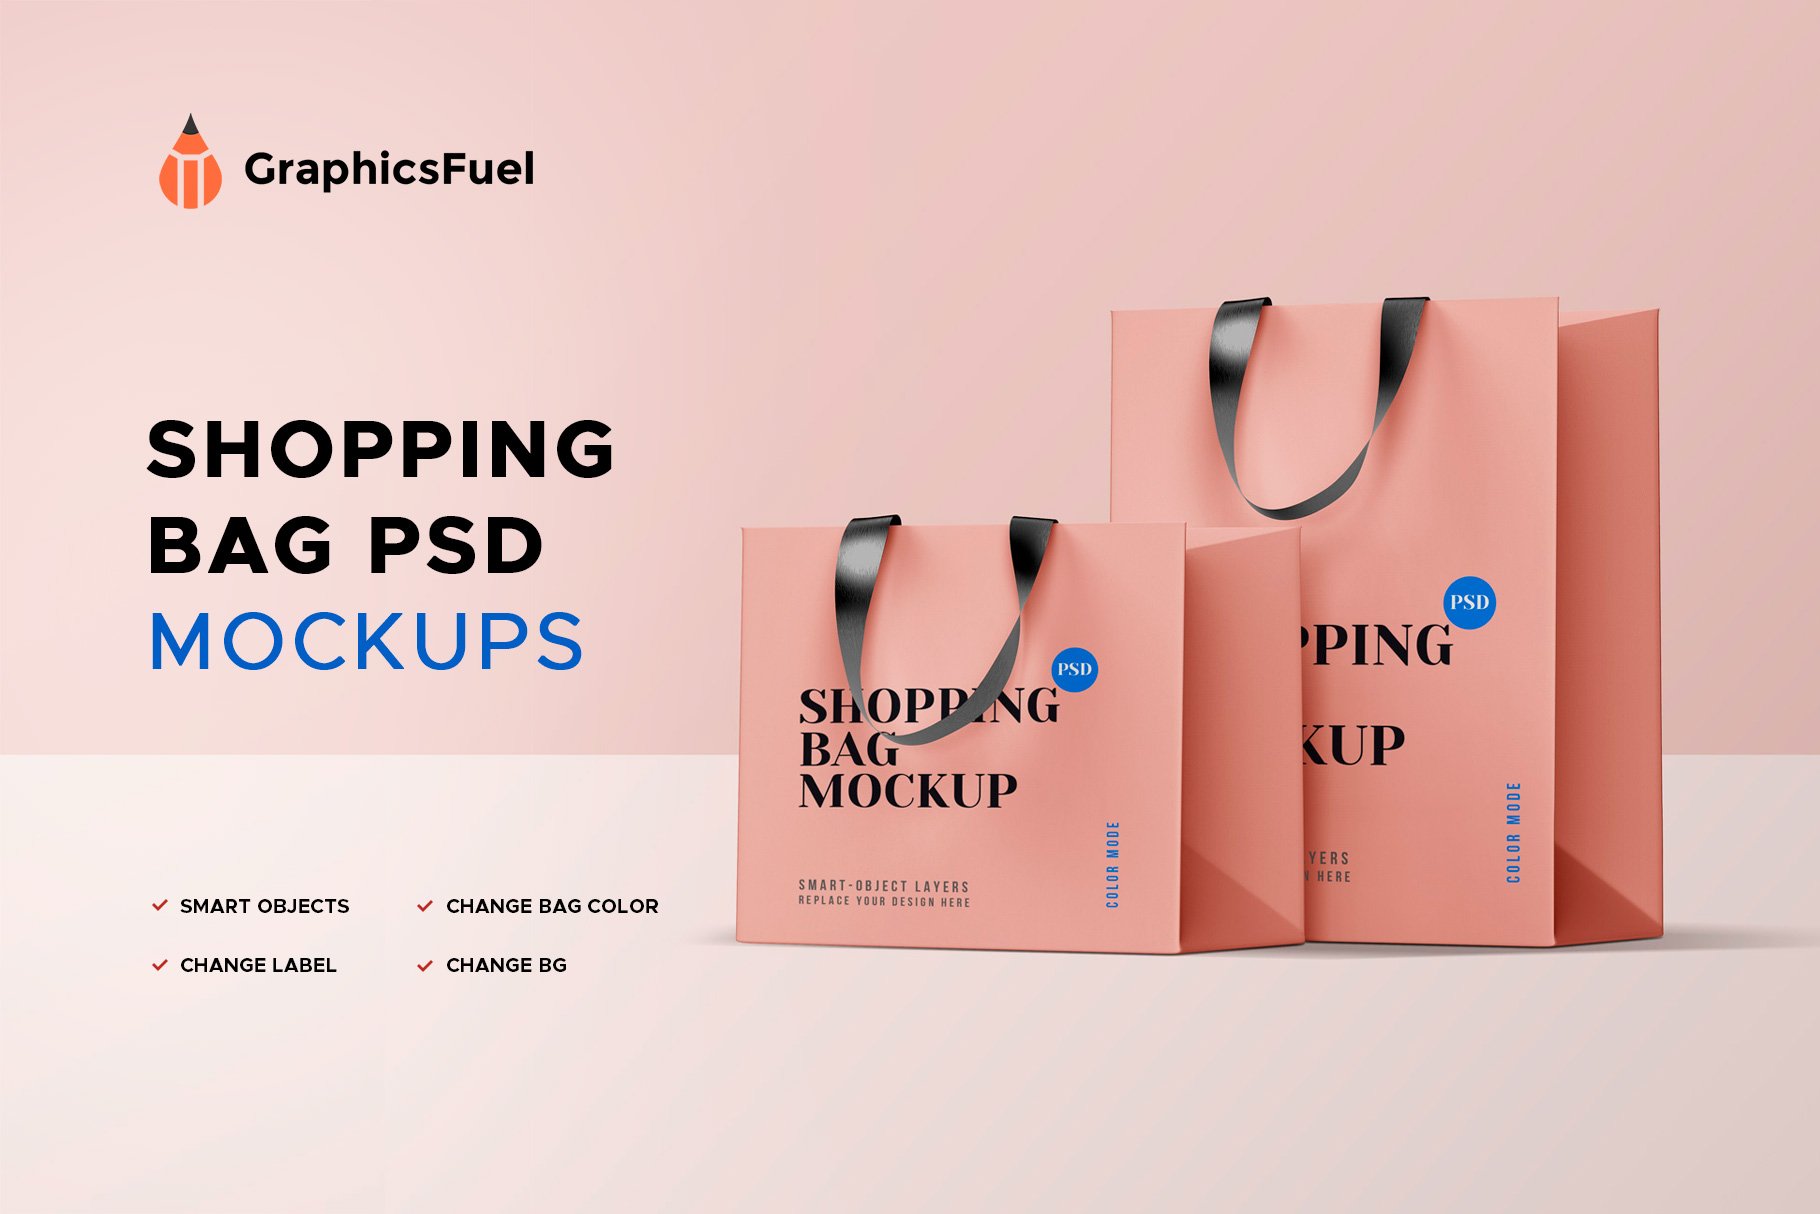 Shopping Bag Mockup Set cover image.